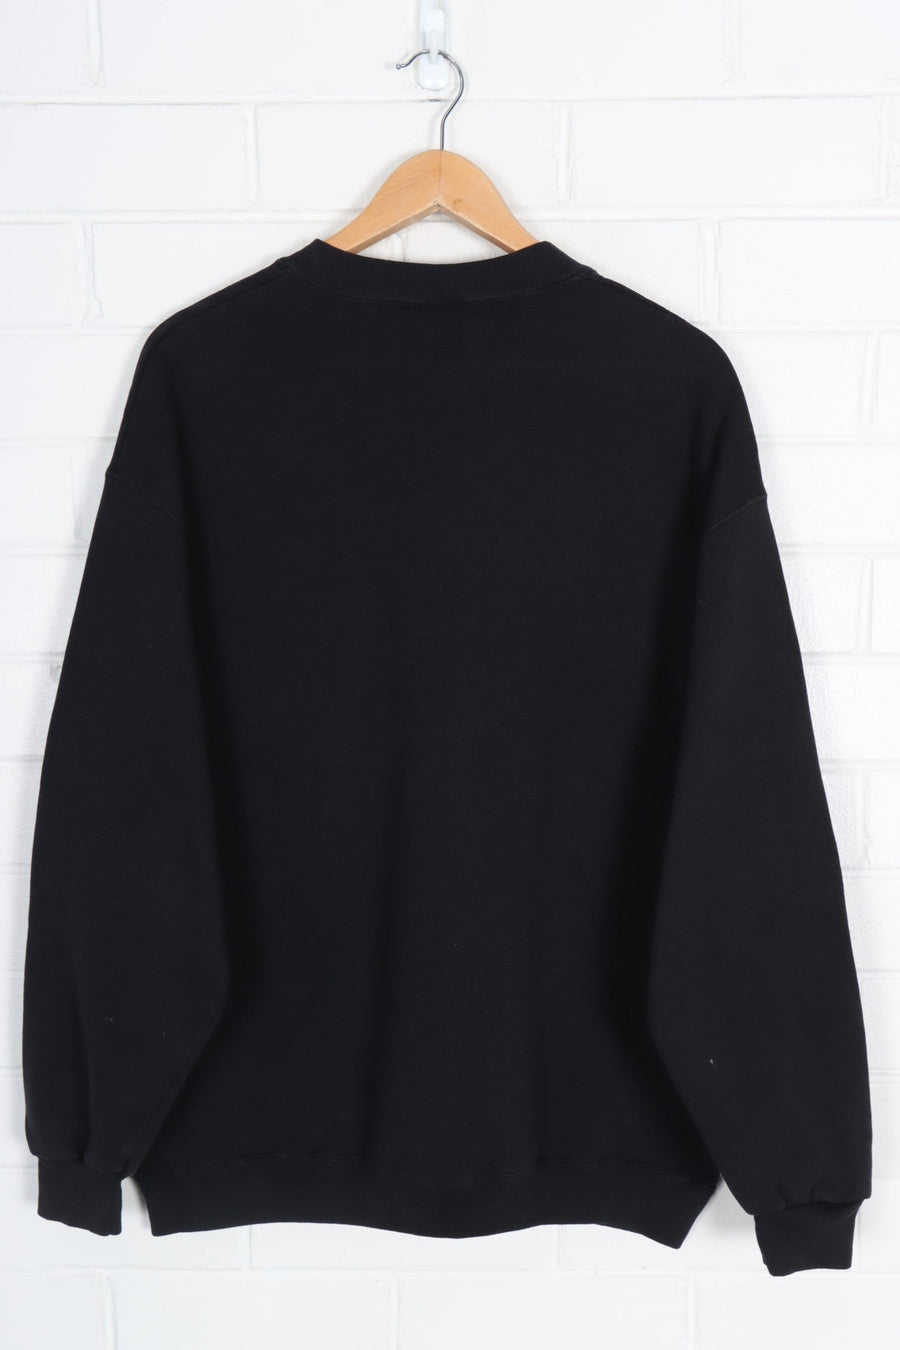 Ducks Unlimited Embroidered Black Sweatshirt USA Made (XL)